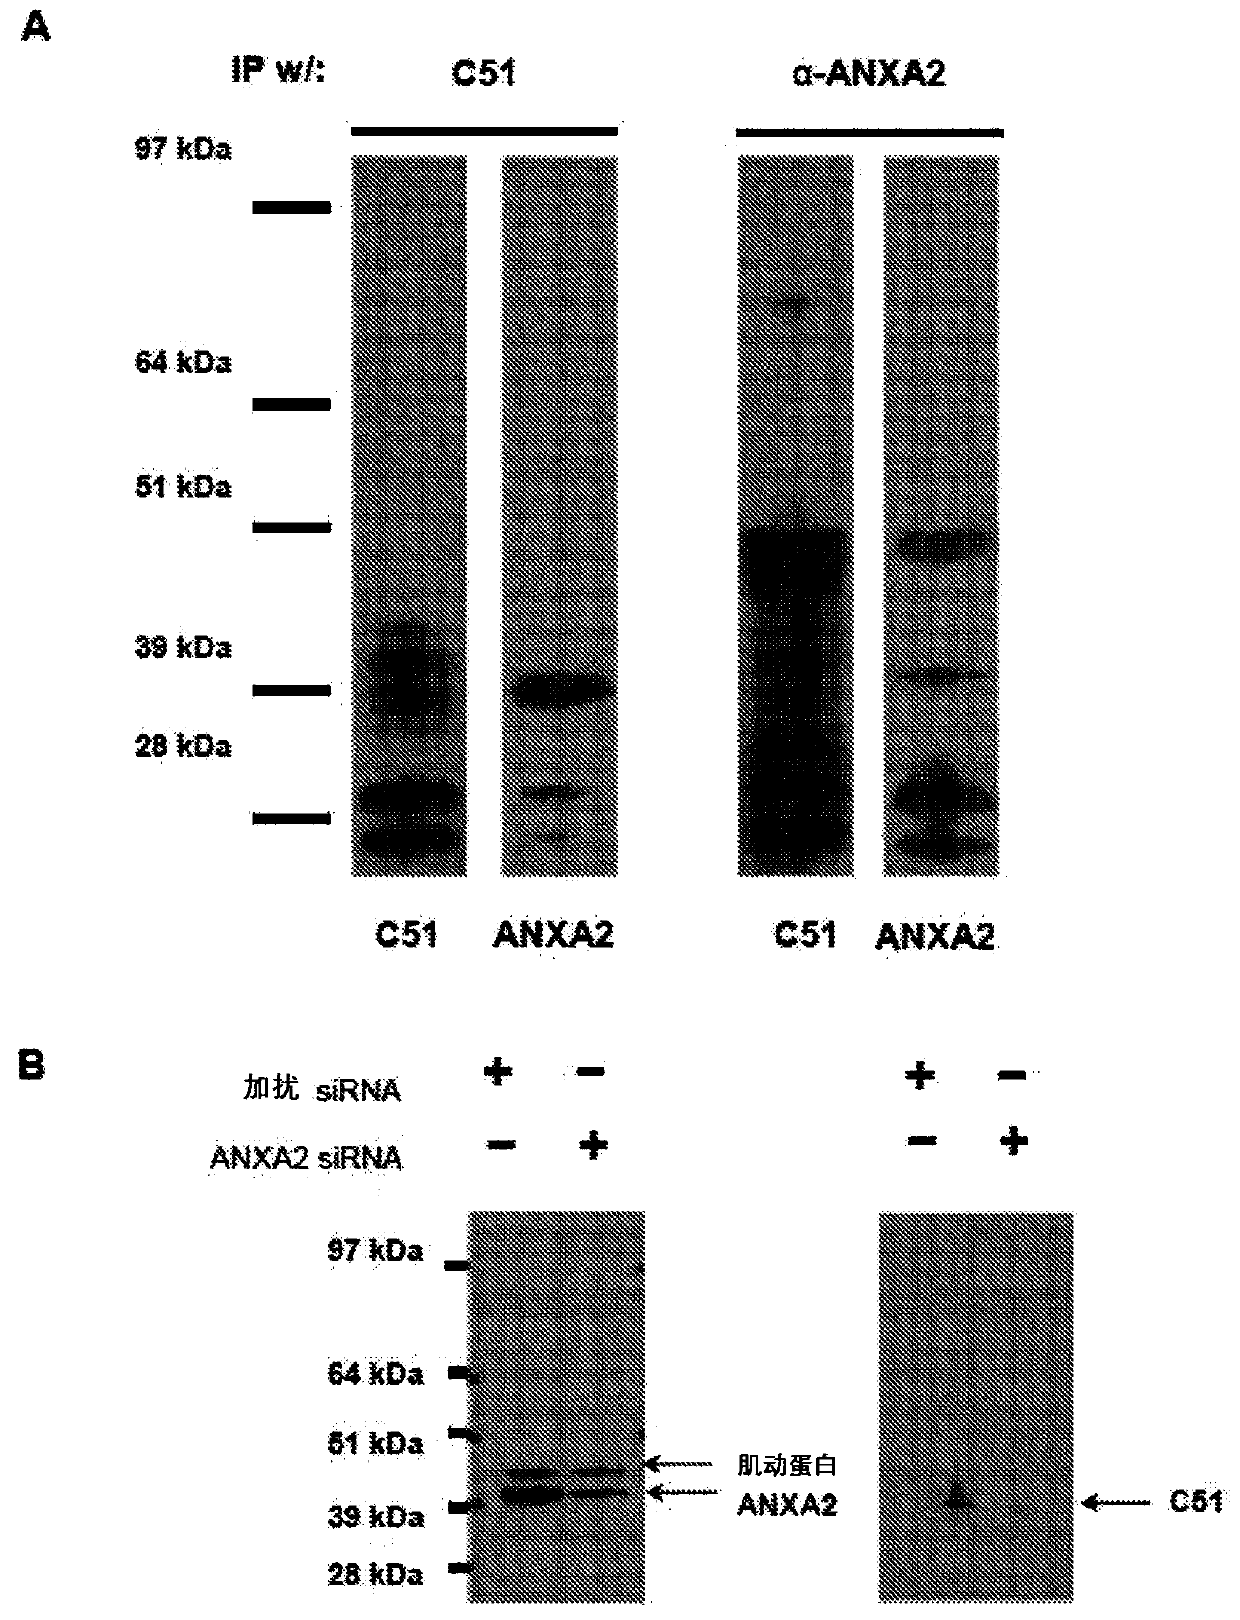 Anti-annexin a2 monoclonal antibodies